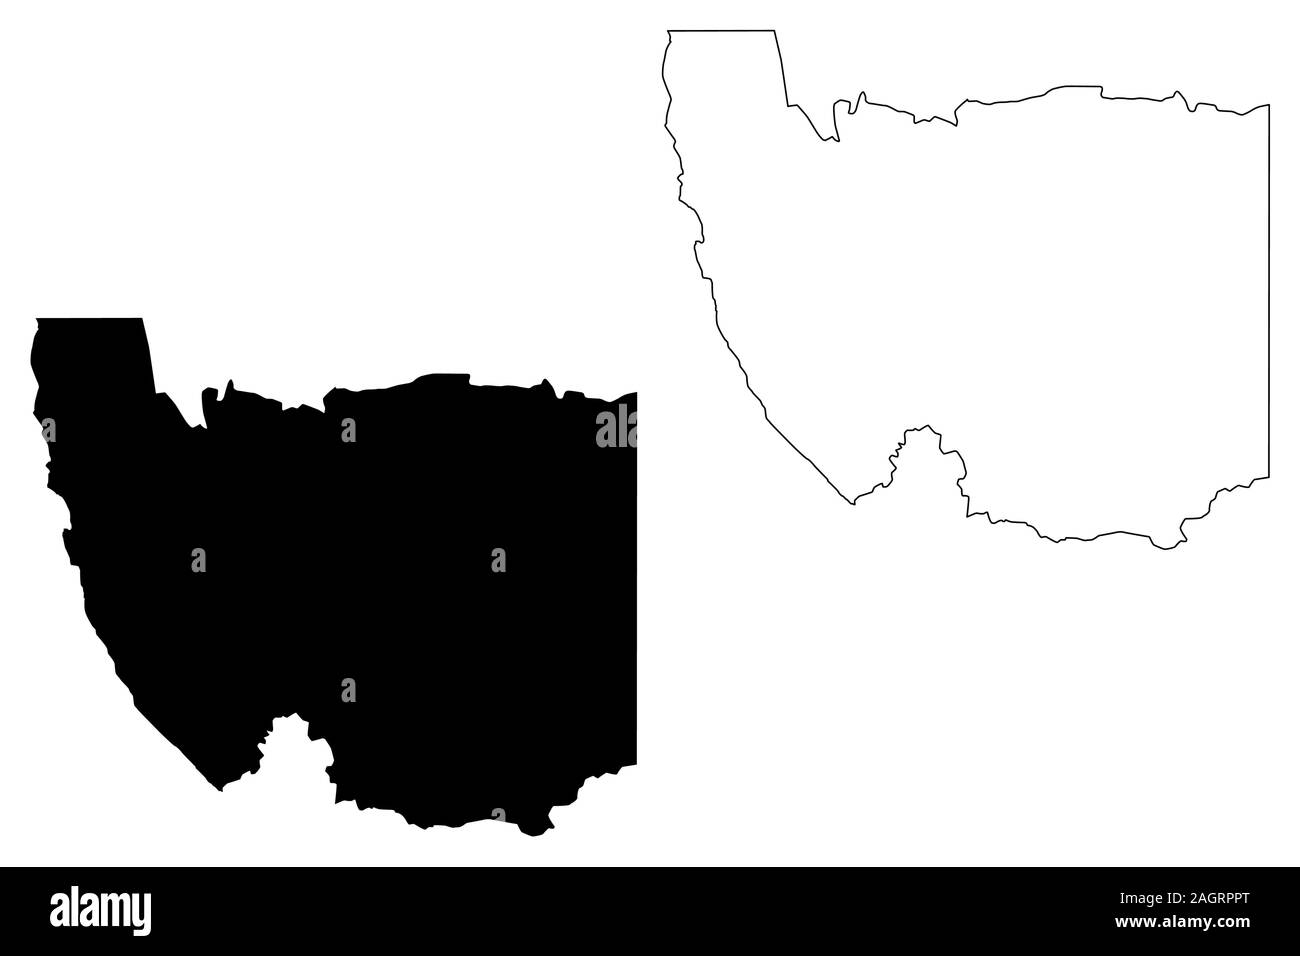 Karas Region (Regionen von Namibia, Republik Namibia) Karte Vektor-illustration, kritzeln Skizze Karas Karte Stock Vektor